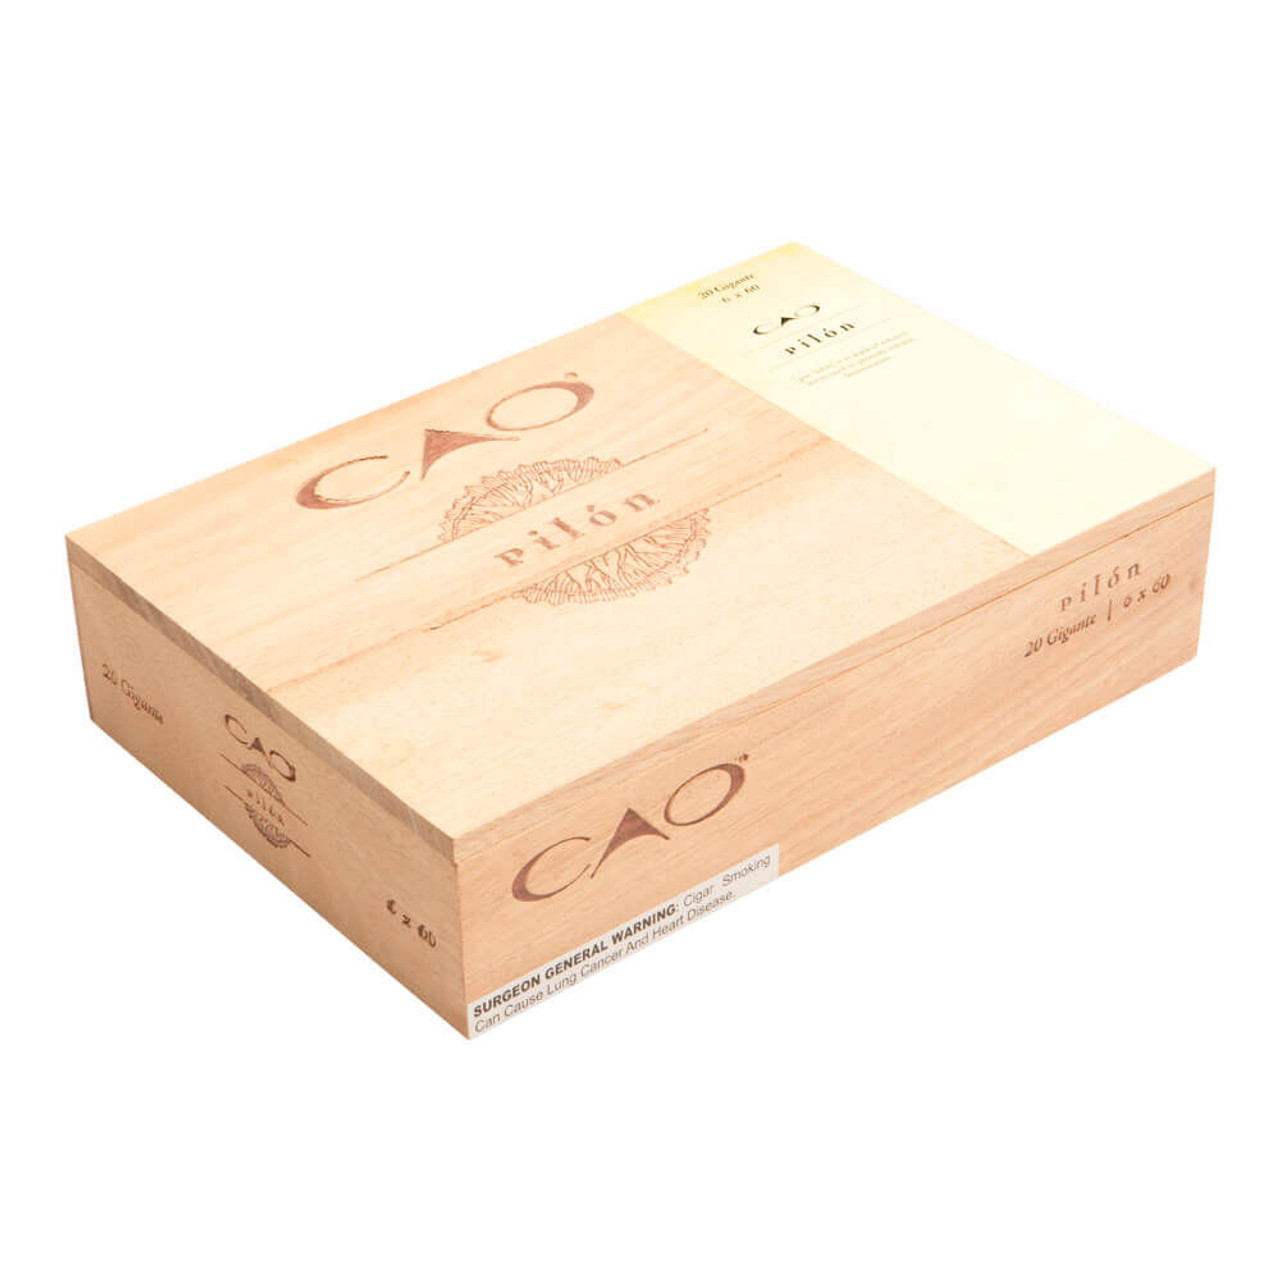 CAO Pilon Gigante Cigars - 6 x 60 (Box of 20) *Box